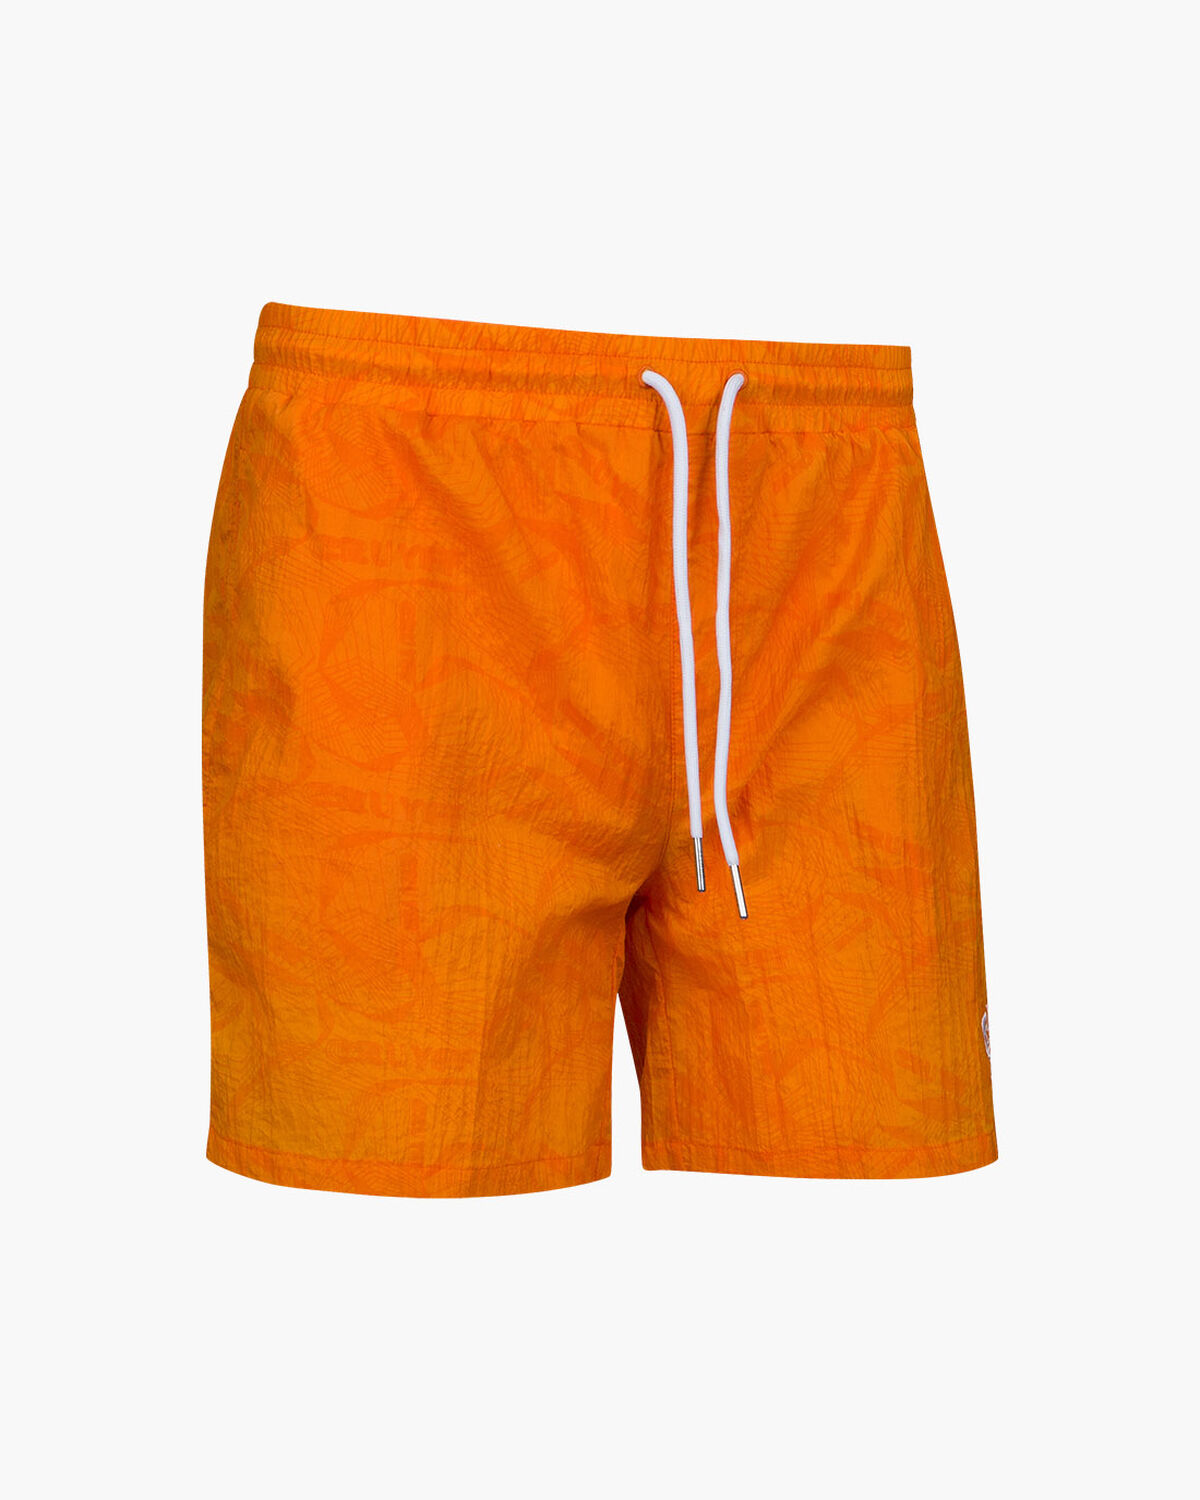 Ramir Swimshort - Orange - 95%polyster 5%elastane, Orange, hi-res